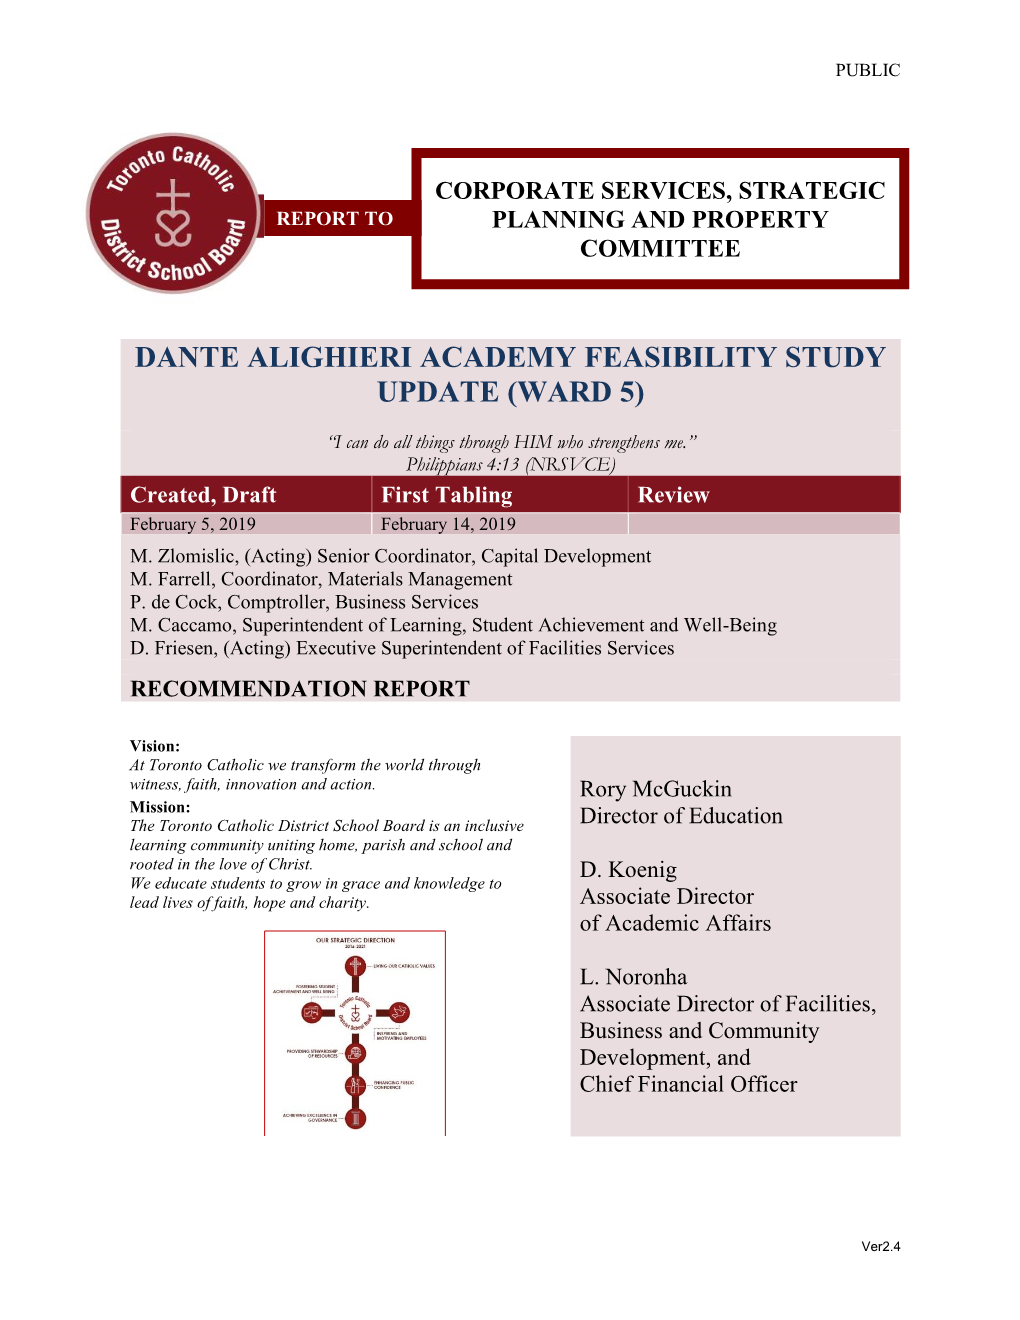 Dante Alighieri Academy Feasibility Study Update (Ward 5)